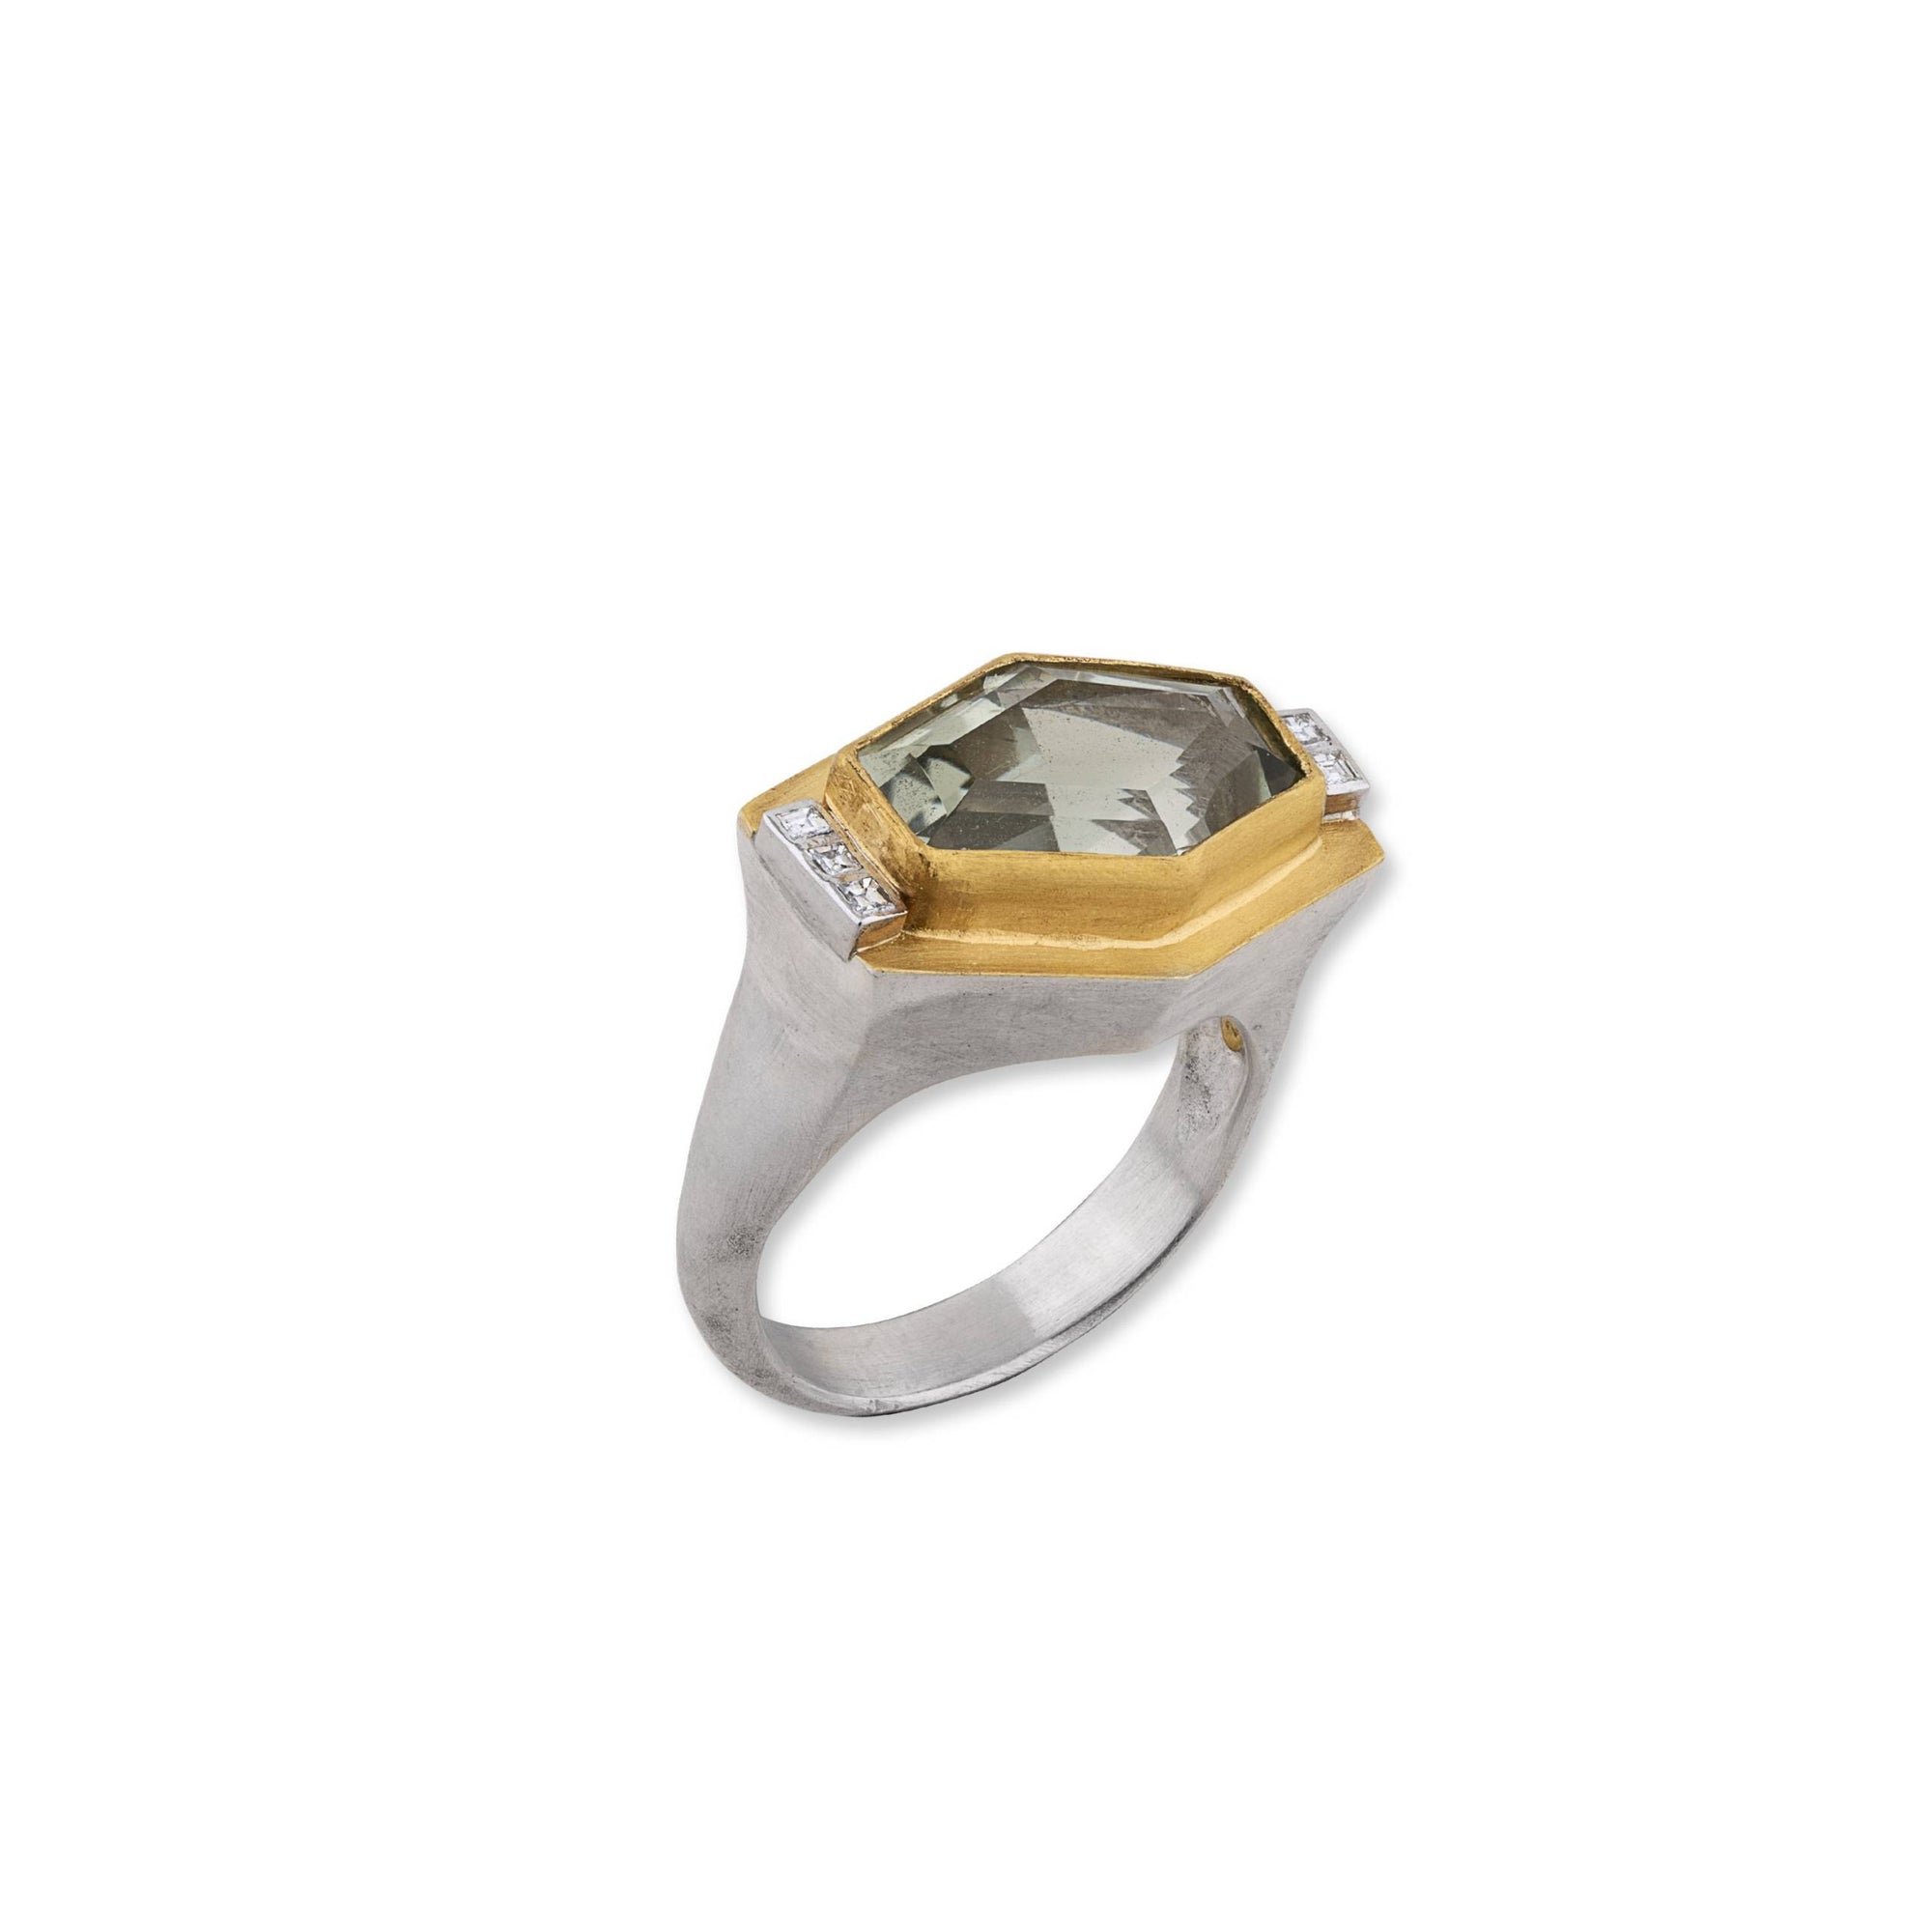 Lika Behar 24K Gold & Sterling Silver "Deco" Green Prasiolite Ring